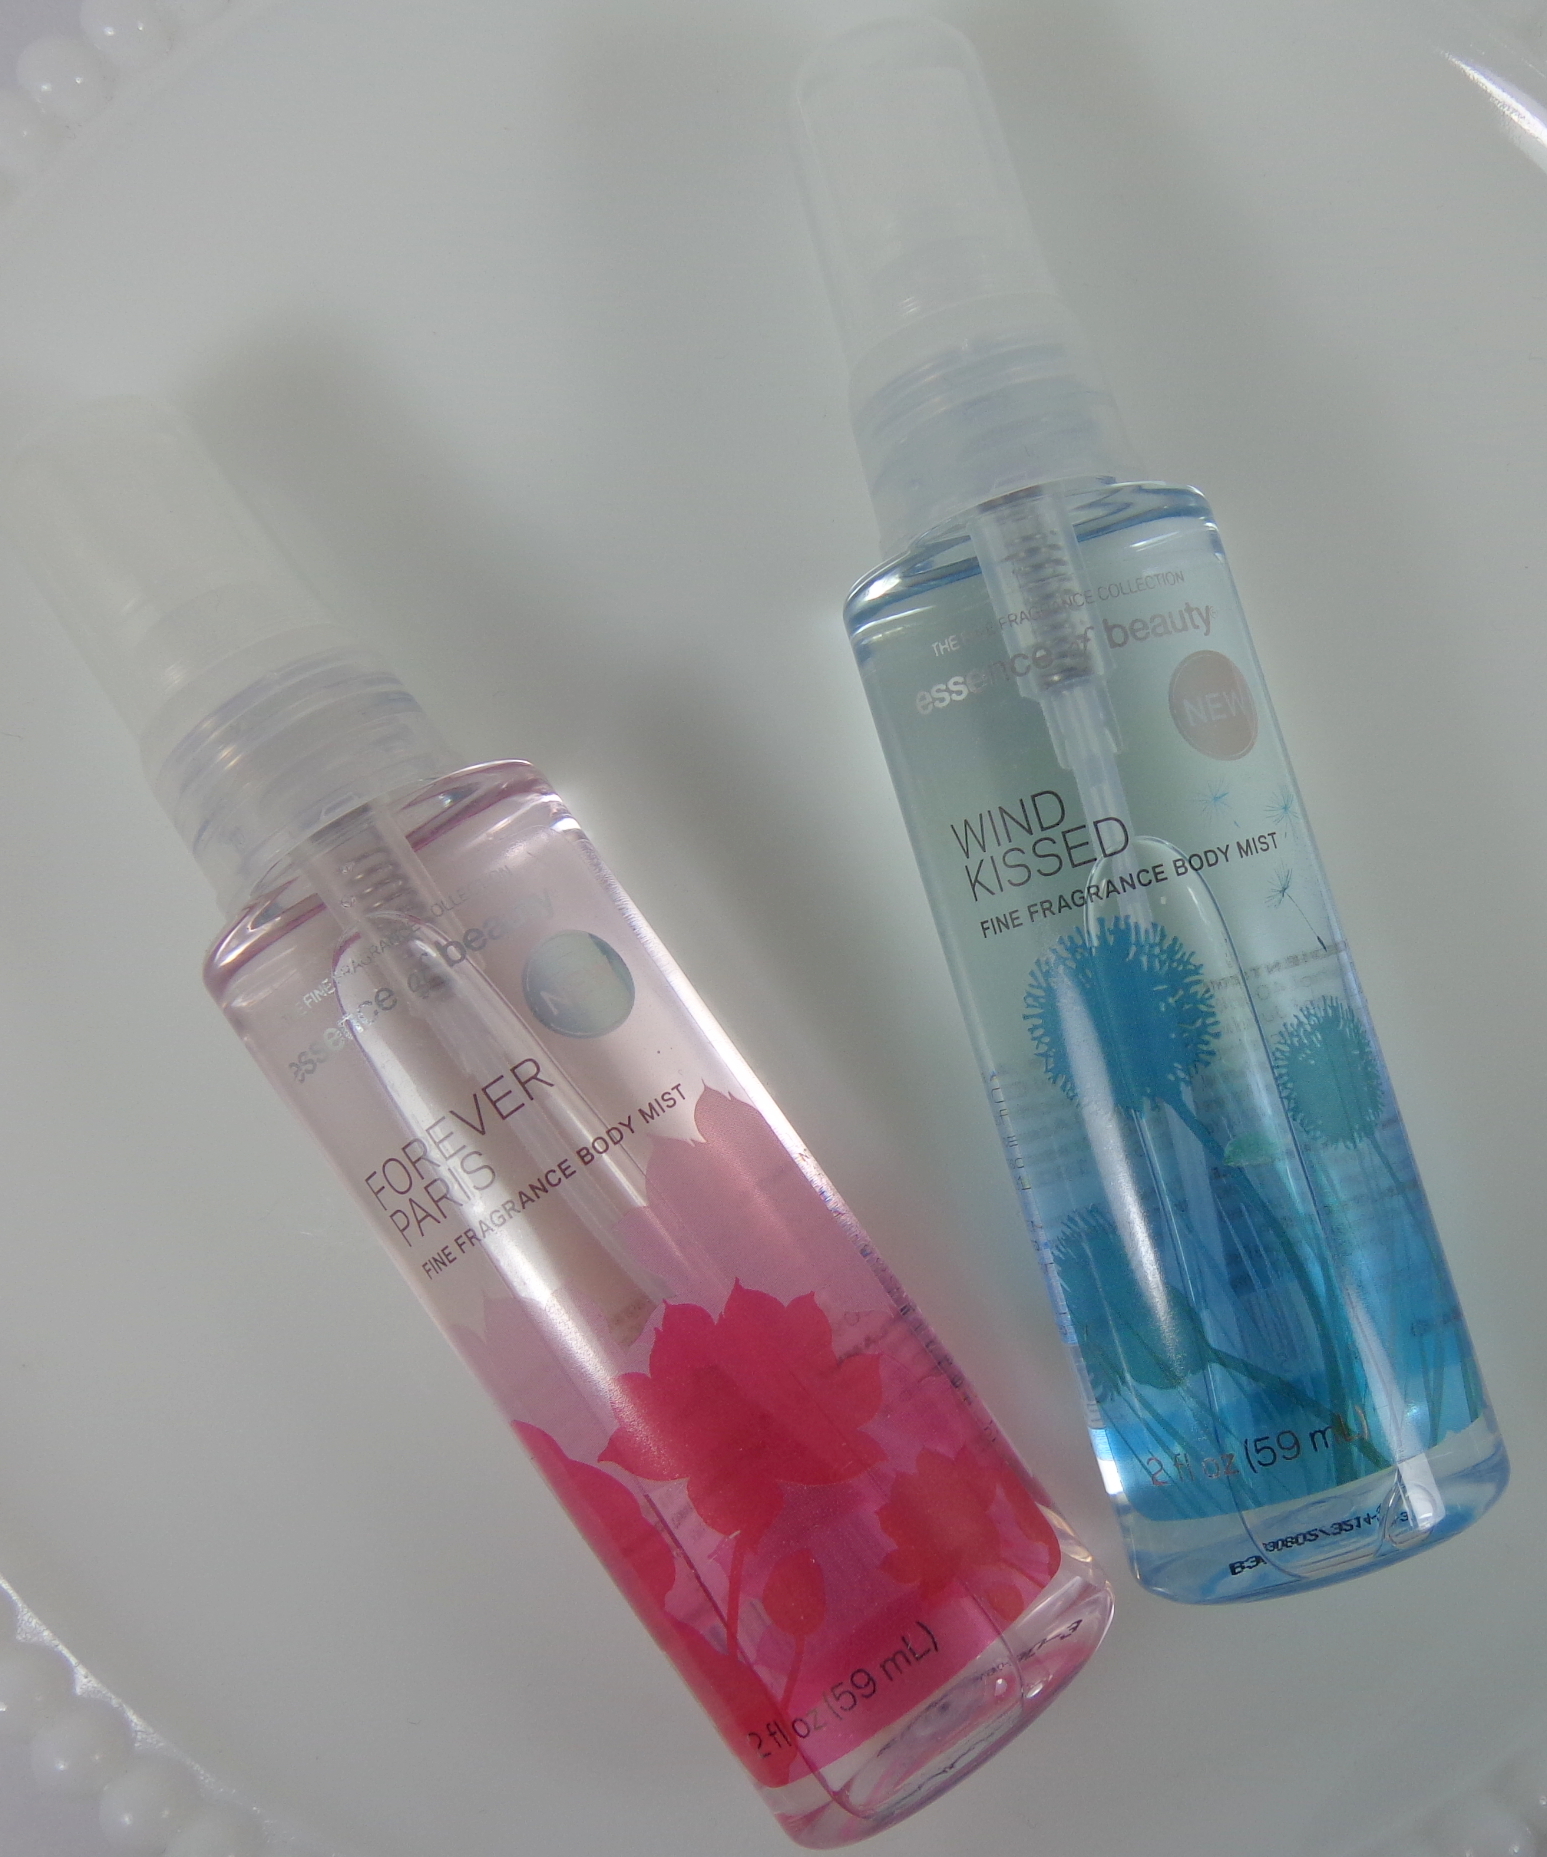 Review: Essence of Beauty Shower Gel, Body Lotion, Fragrance Mist - My